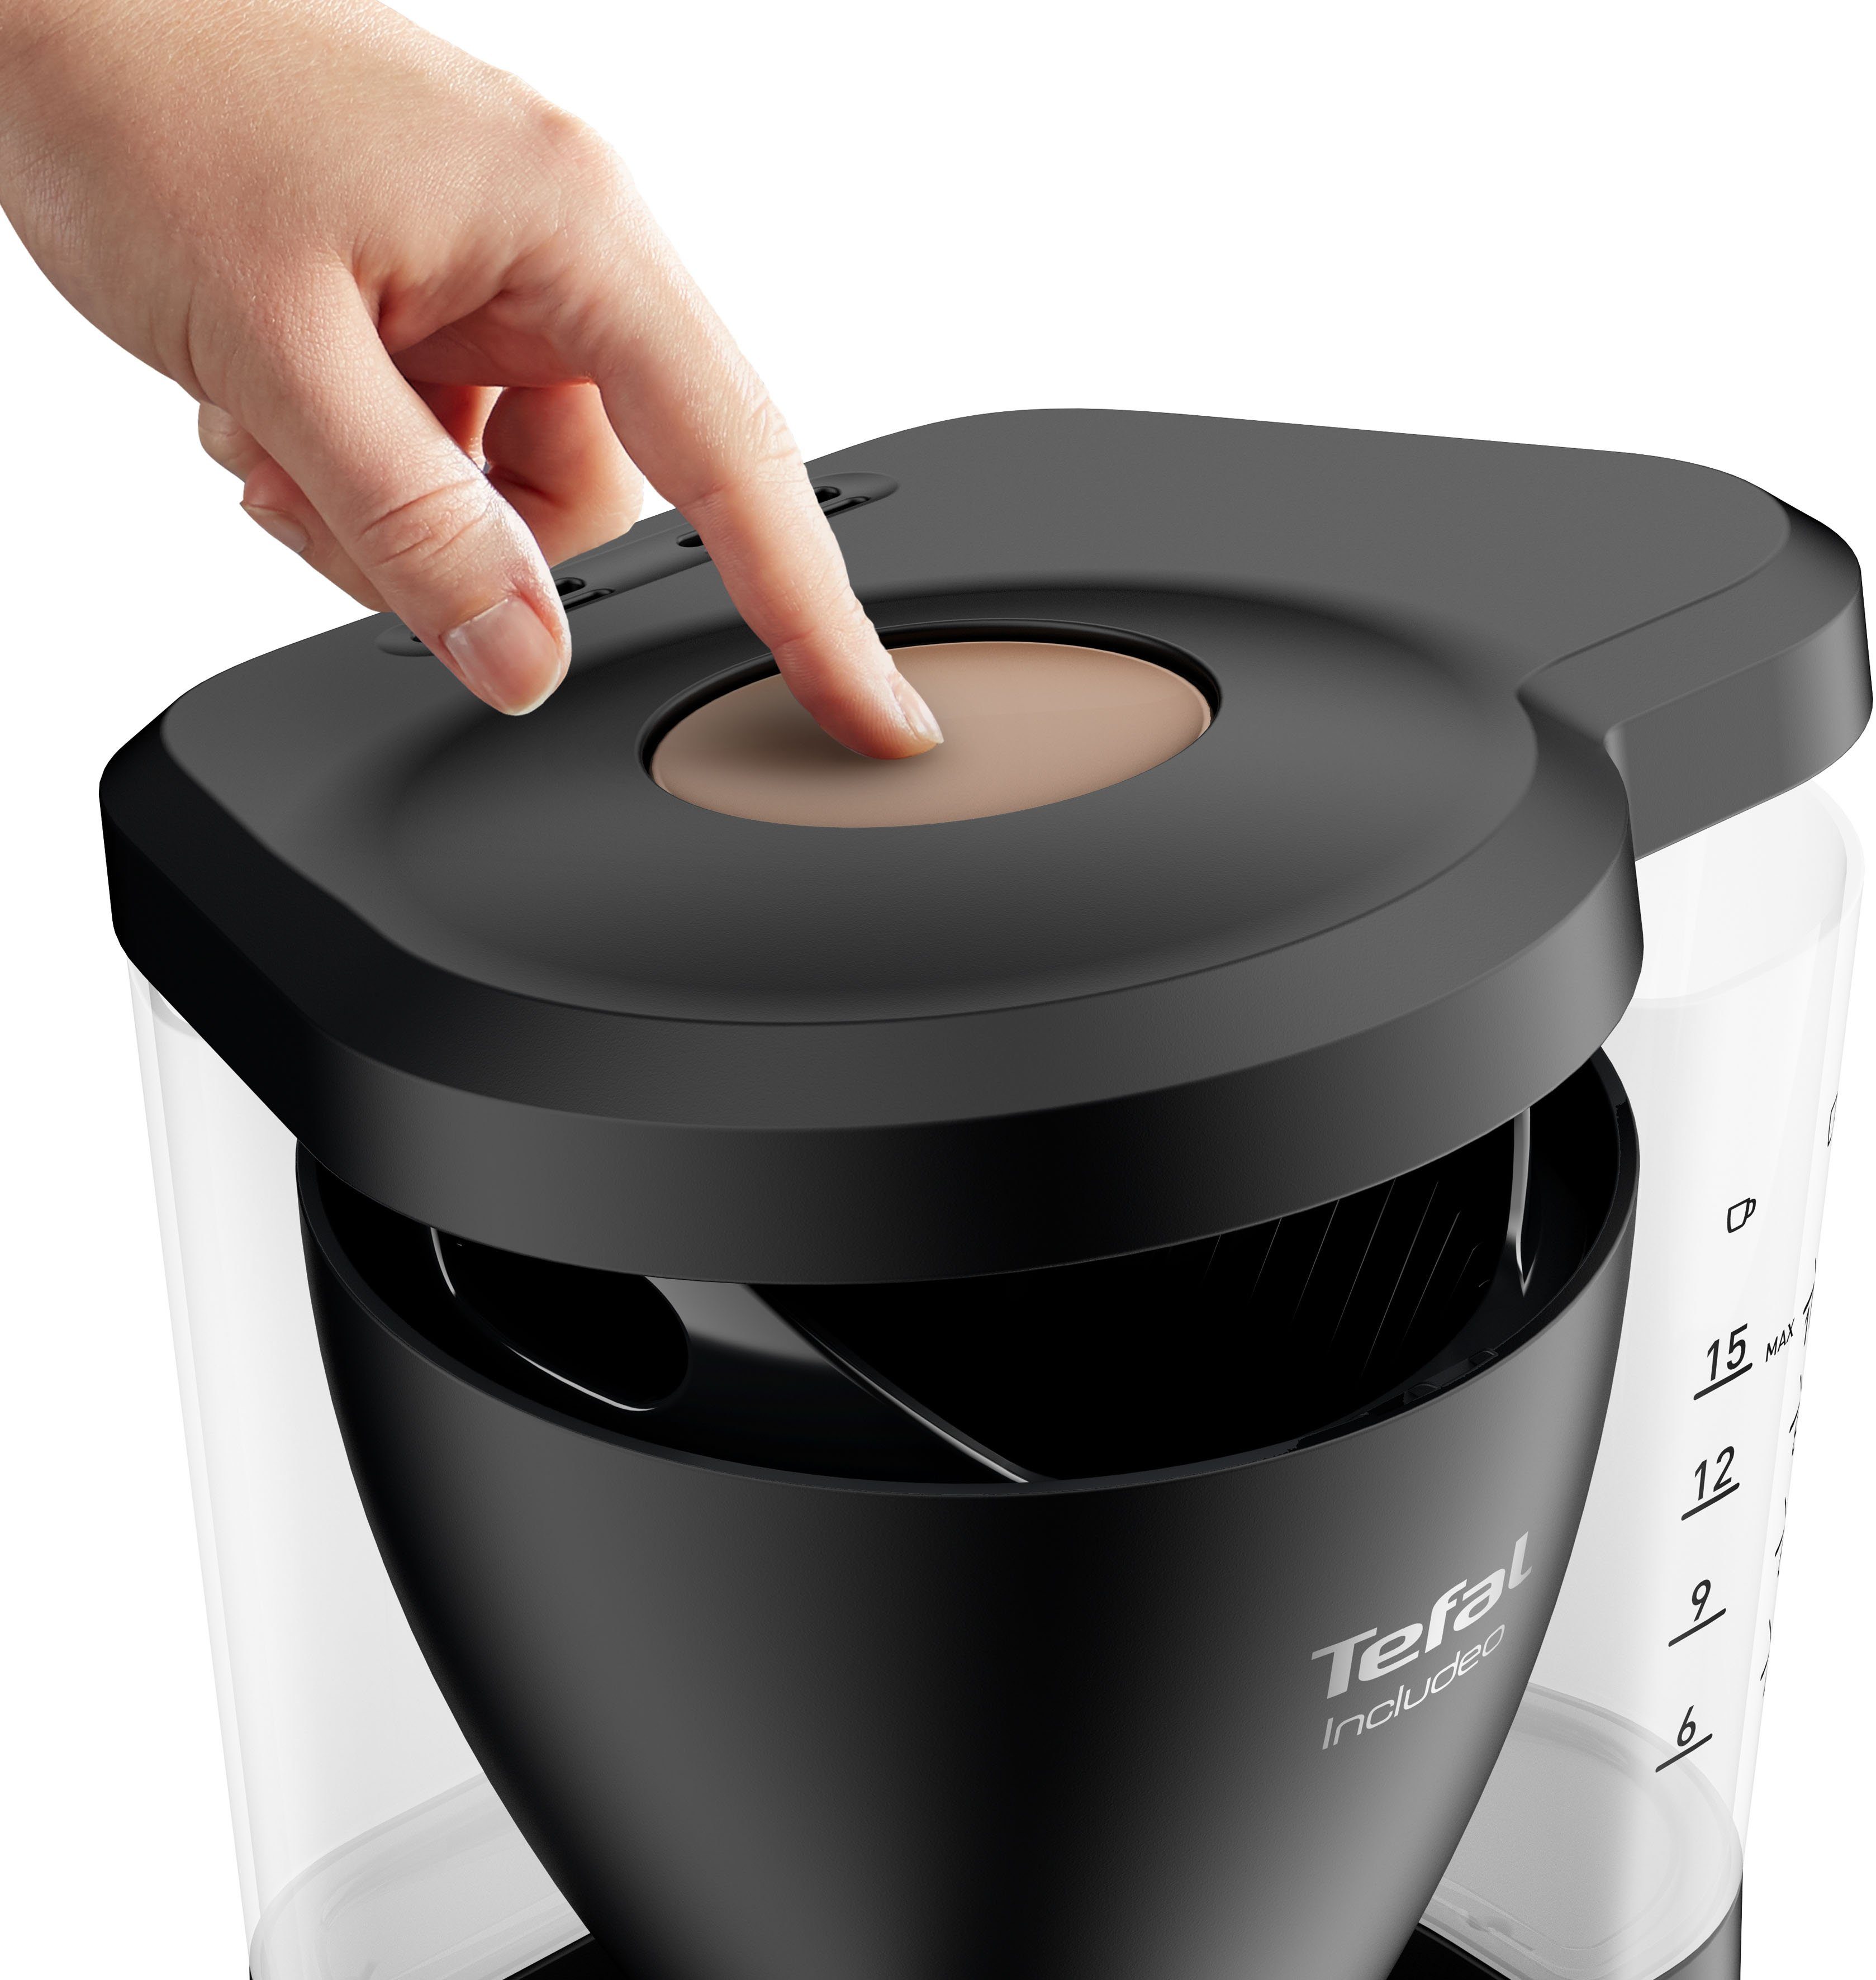 Tefal Filterkaffeemaschine Kaffeekanne, Filtereinsatz Incluedo, - 15 L, 10 Tassen, CM5338 1,25l Griffen mit herausnehmbarer 1,25 zwei